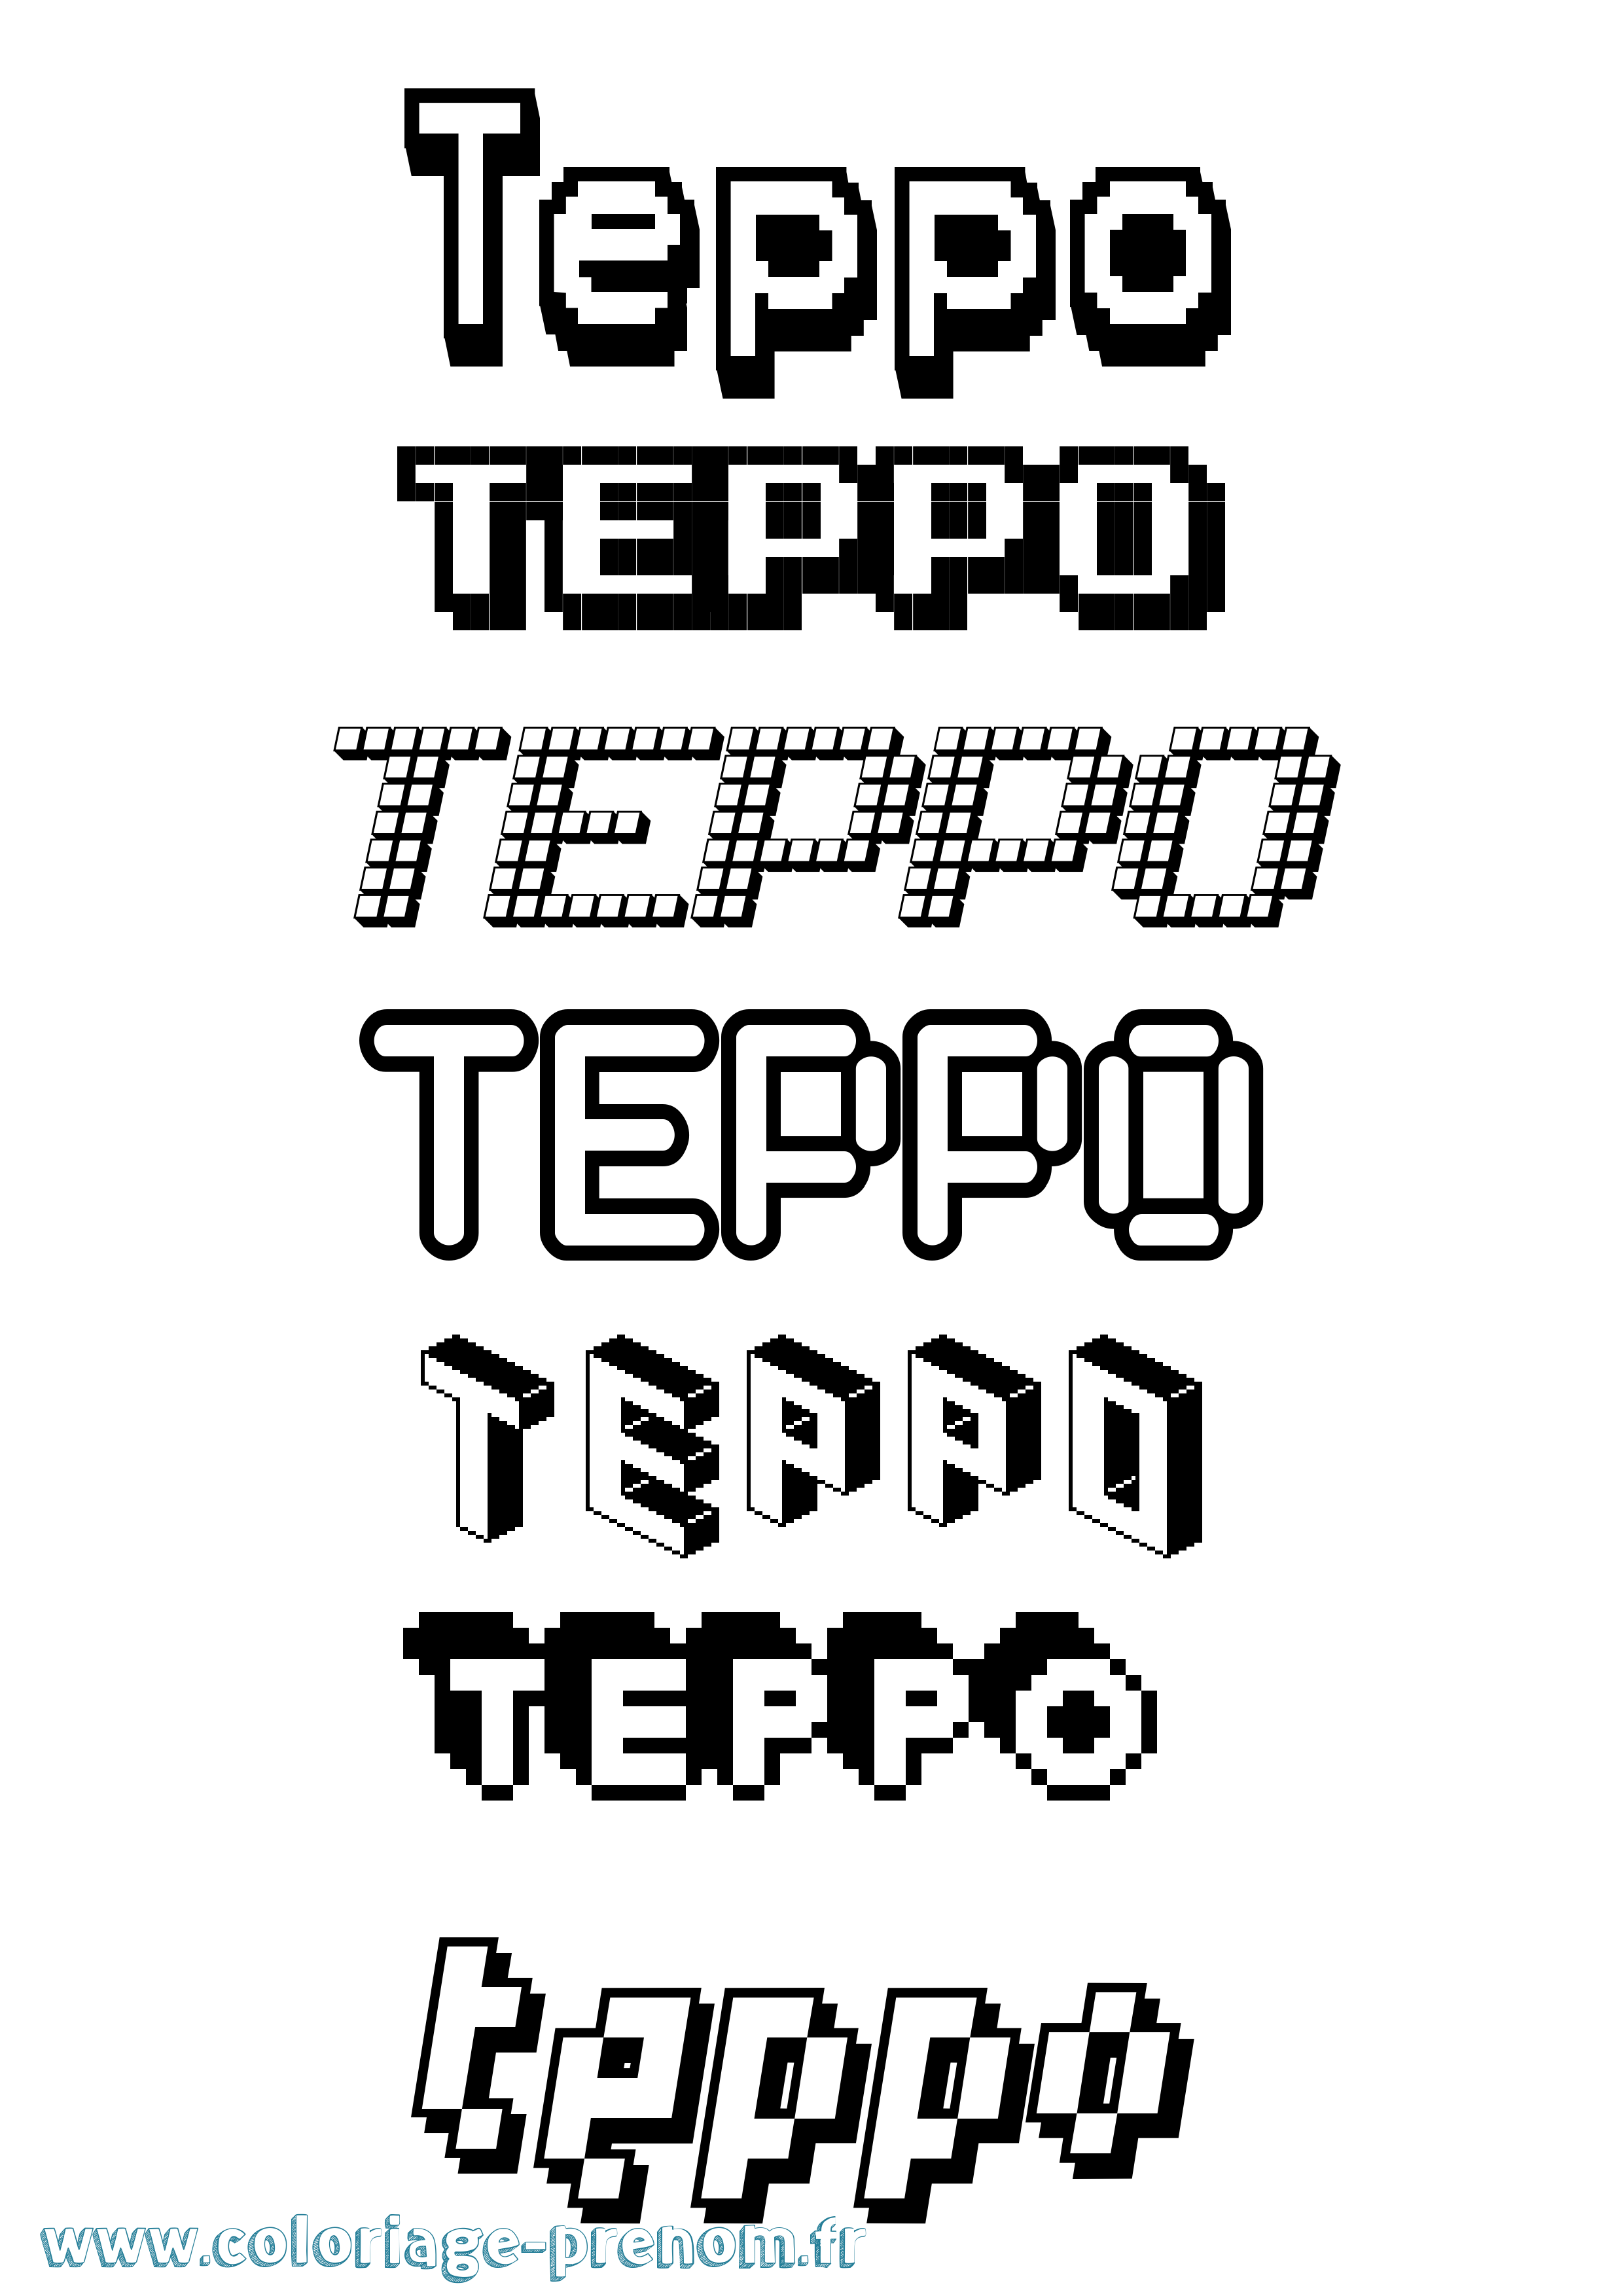 Coloriage prénom Teppo Pixel